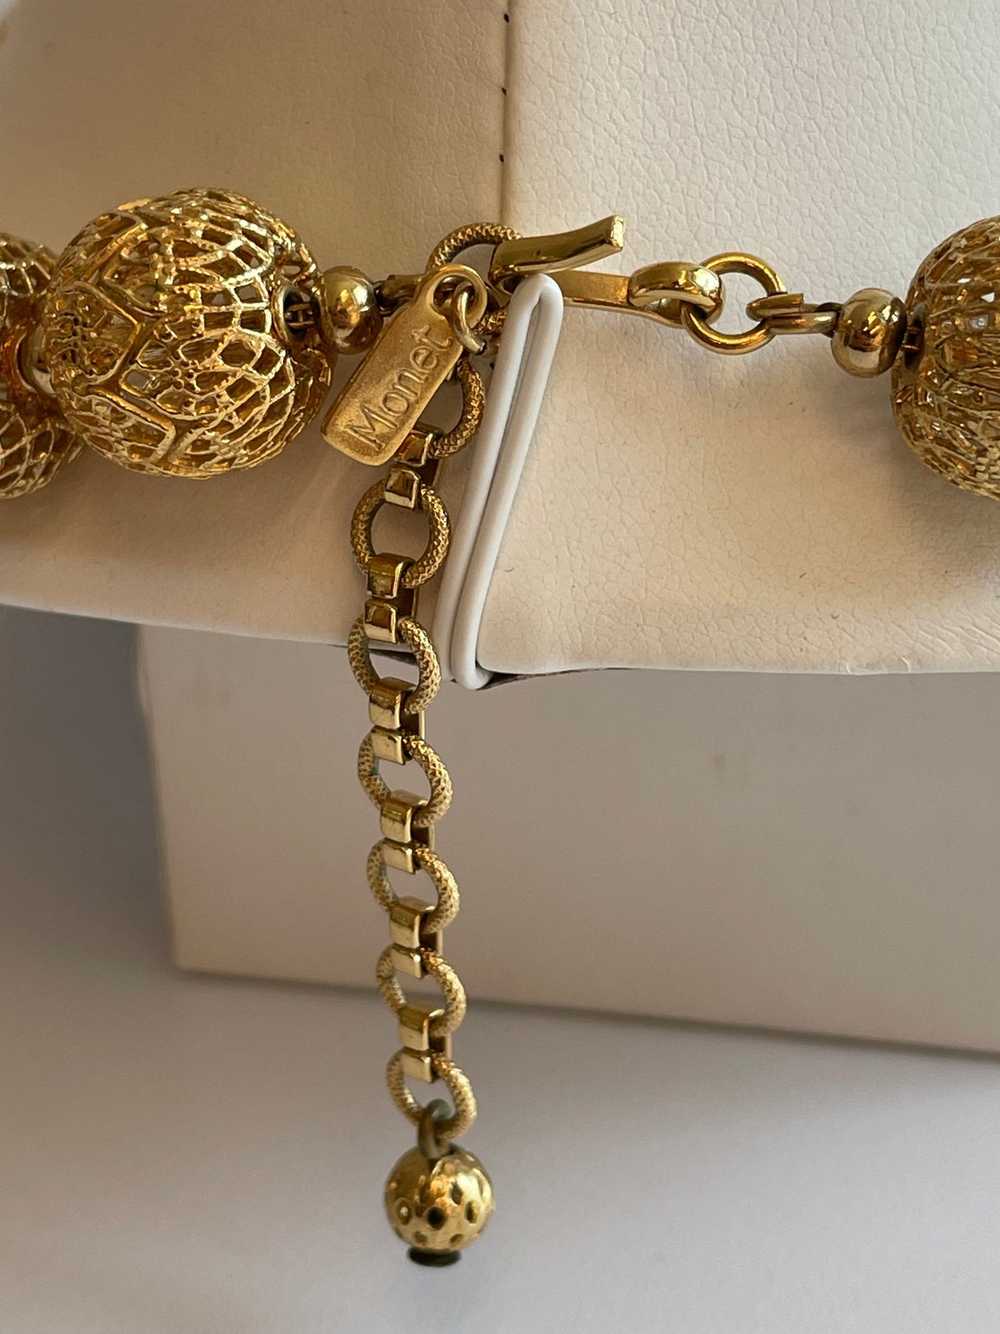 1960’s Monet Gold FiligreeBall Necklace - image 7